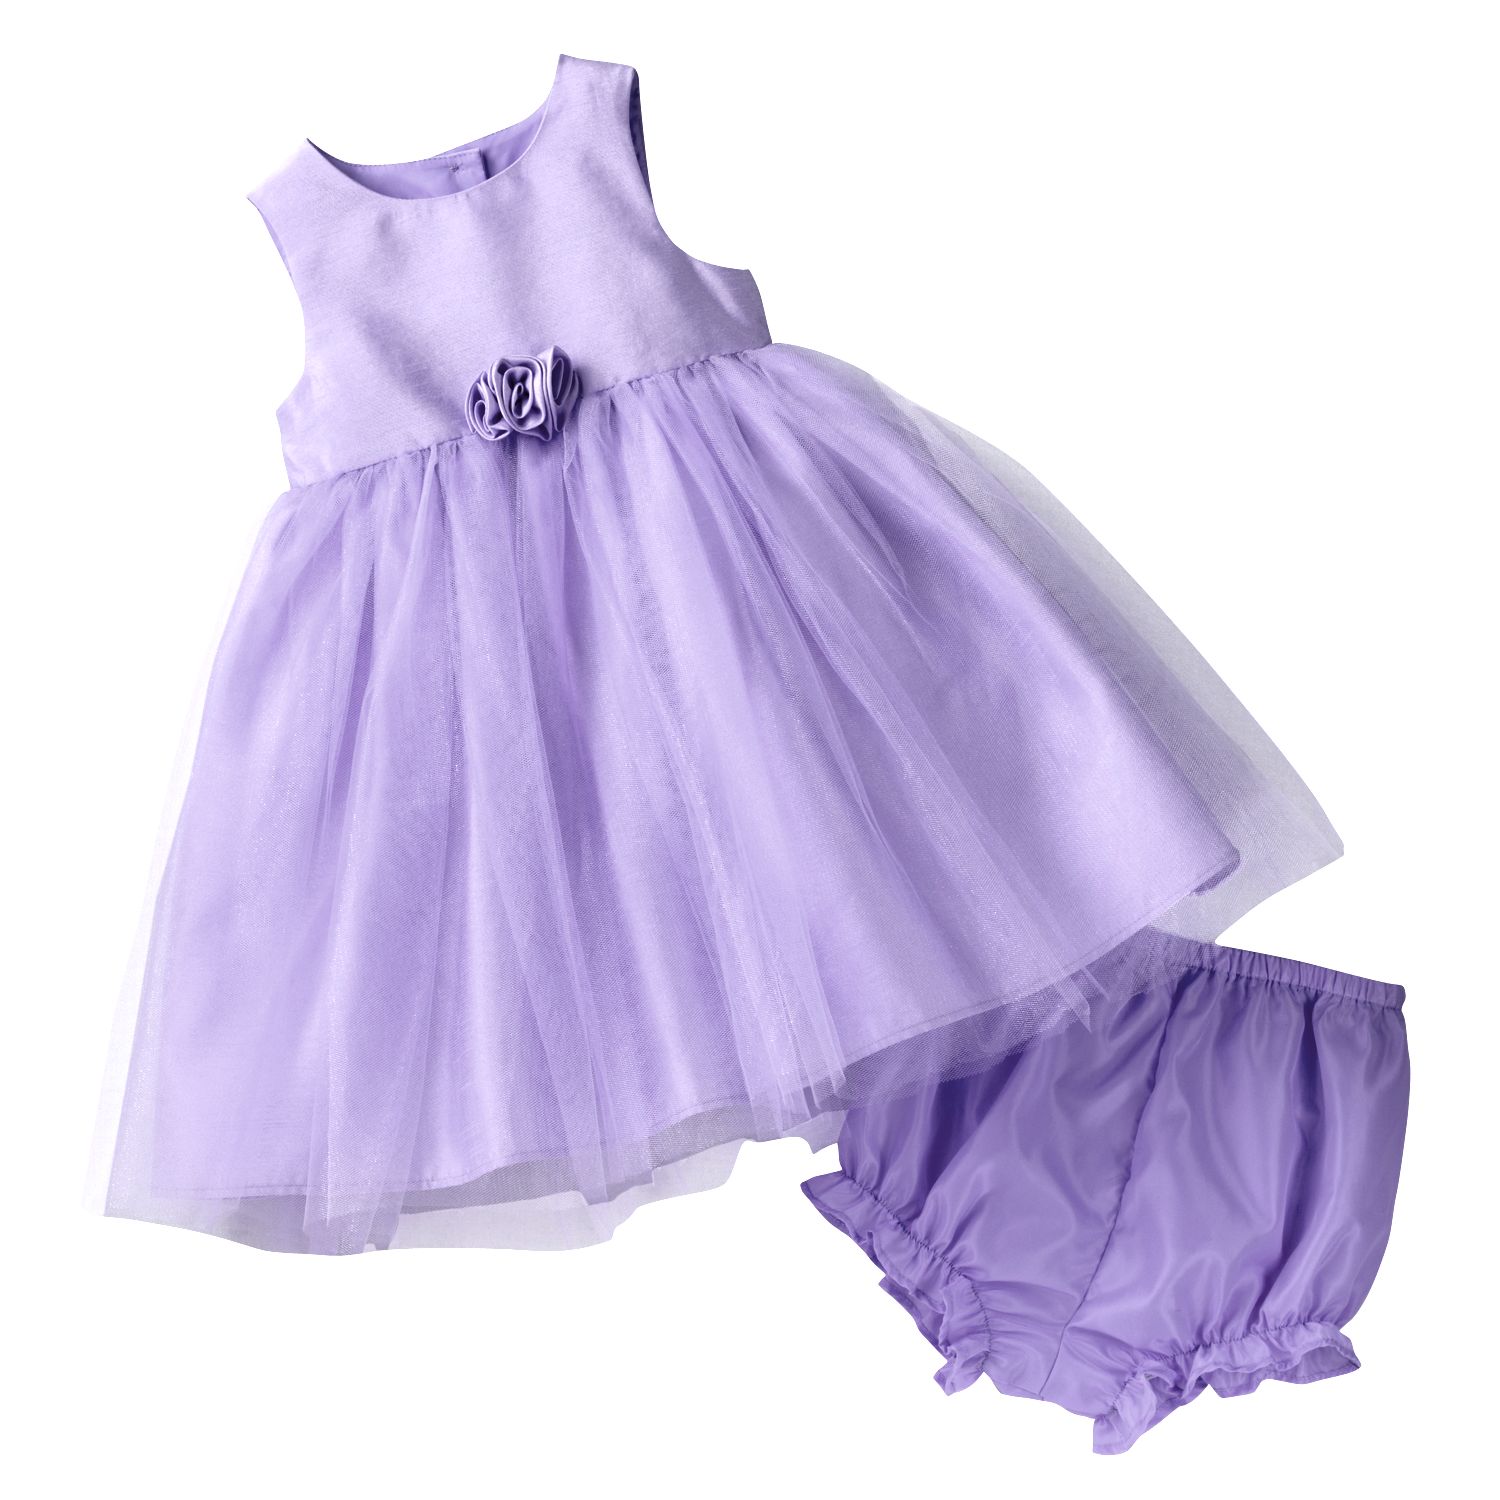 kohls lavender dress